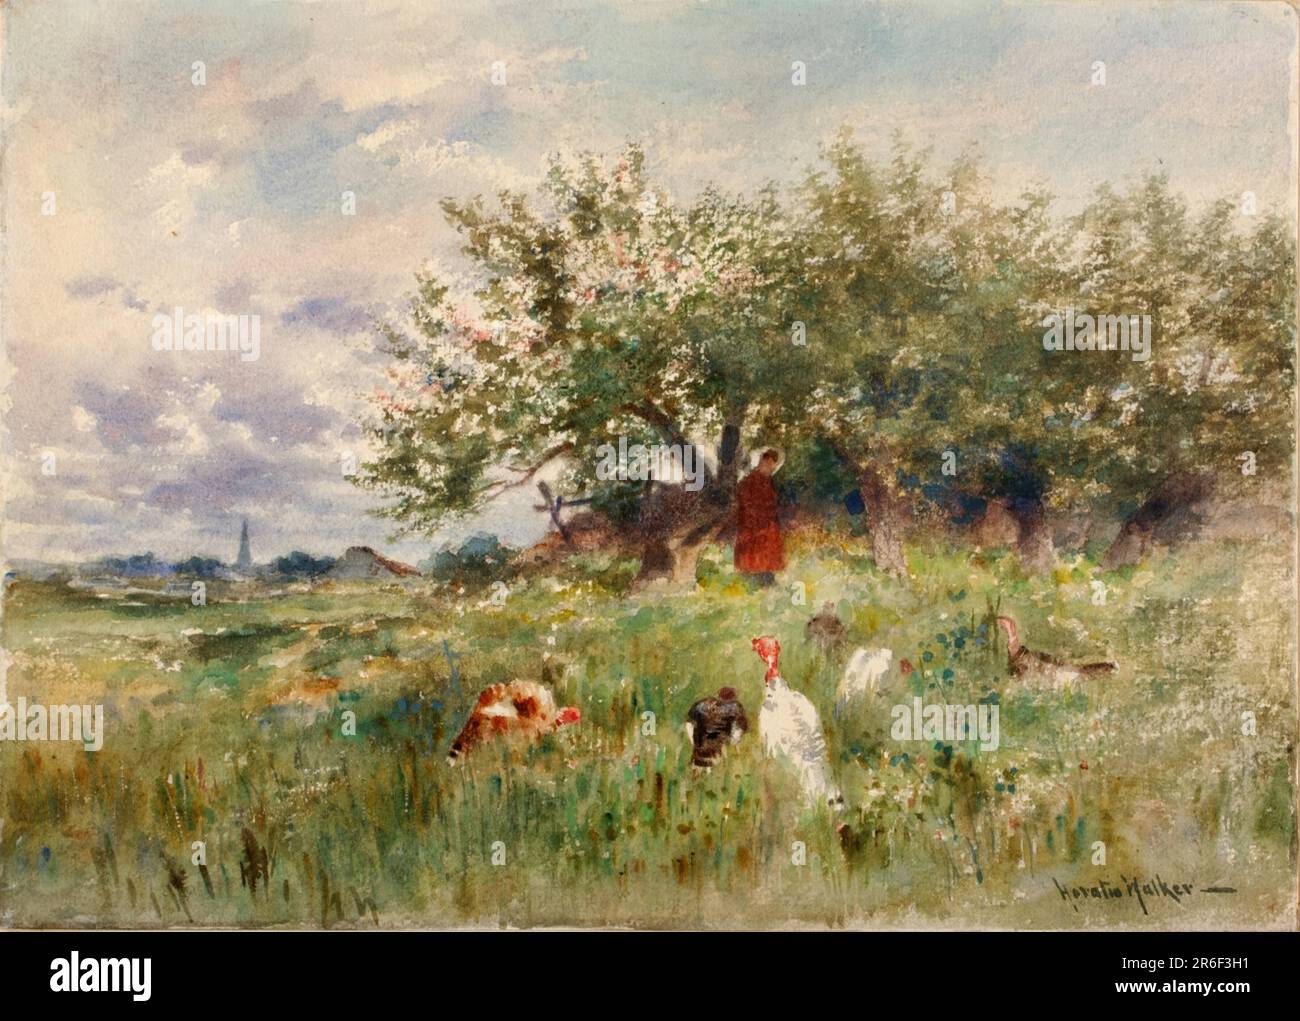 Watching the Turkeys. Date: n.d. watercolor. Museum: Smithsonian American Art Museum. Stock Photo